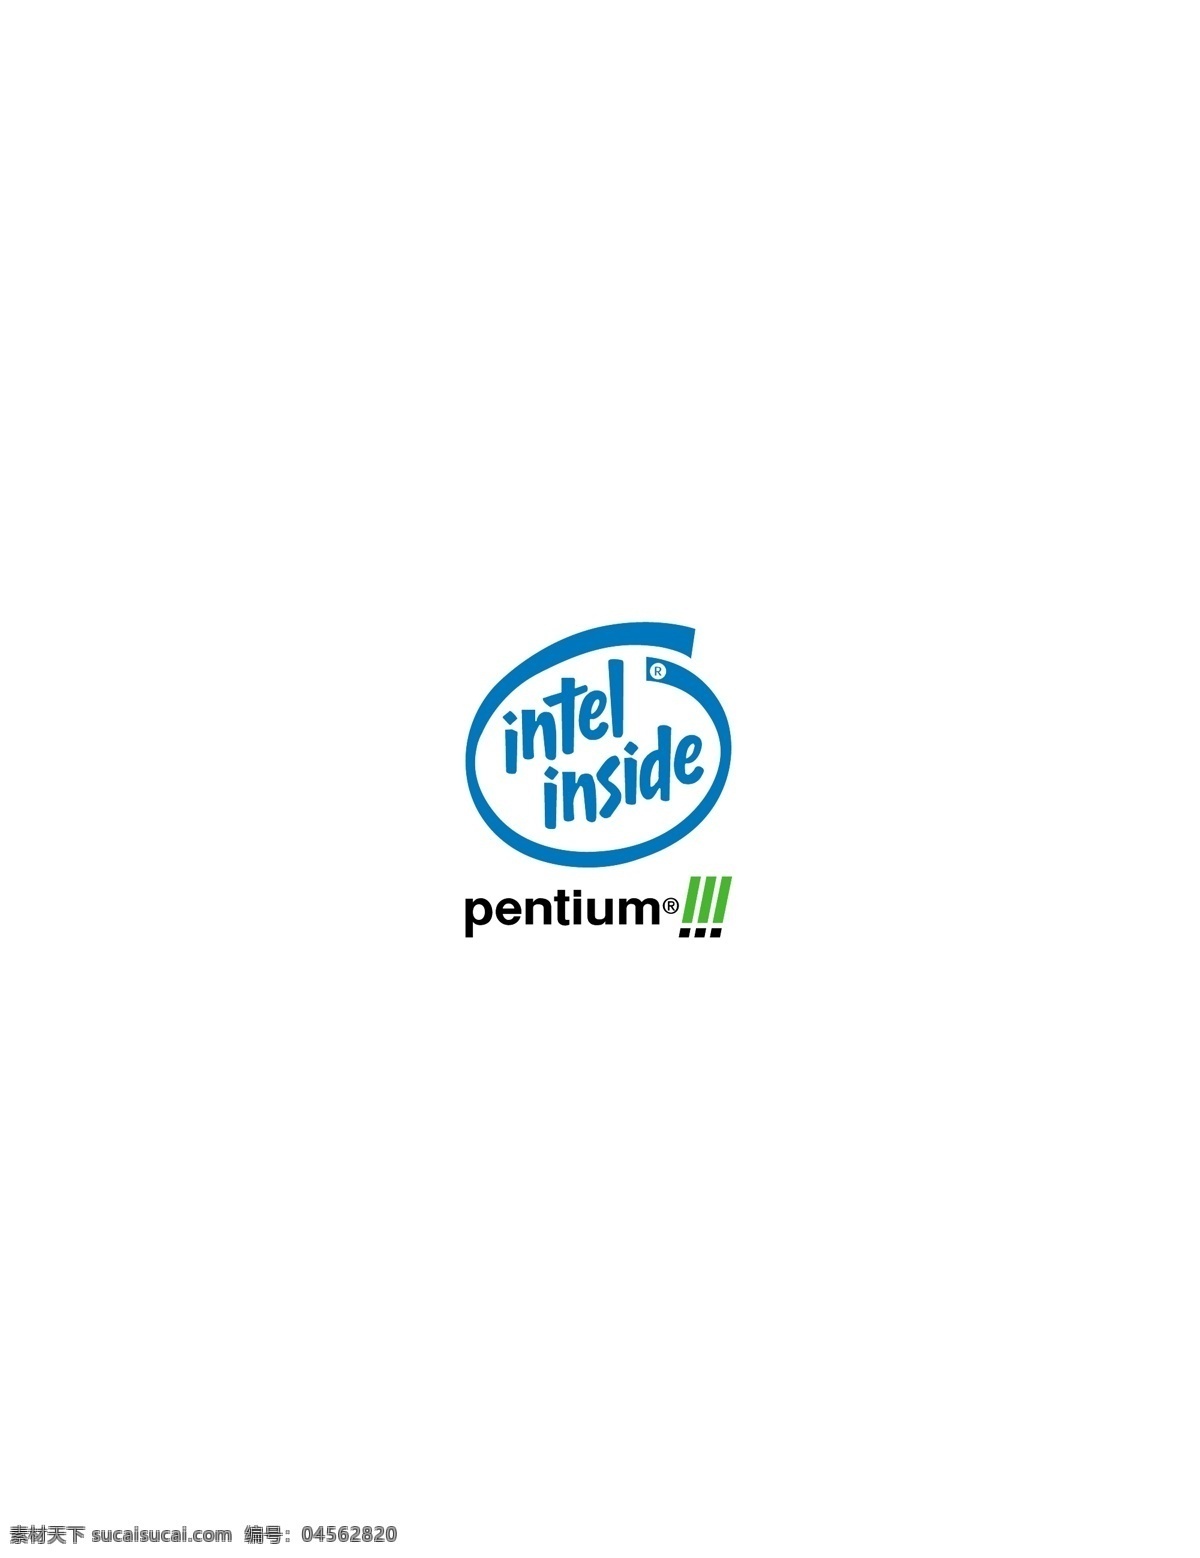 logo大全 logo 设计欣赏 商业矢量 矢量下载 pentium iii processor 软件 硬件 公司 标志 标志设计 欣赏 网页矢量 矢量图 其他矢量图